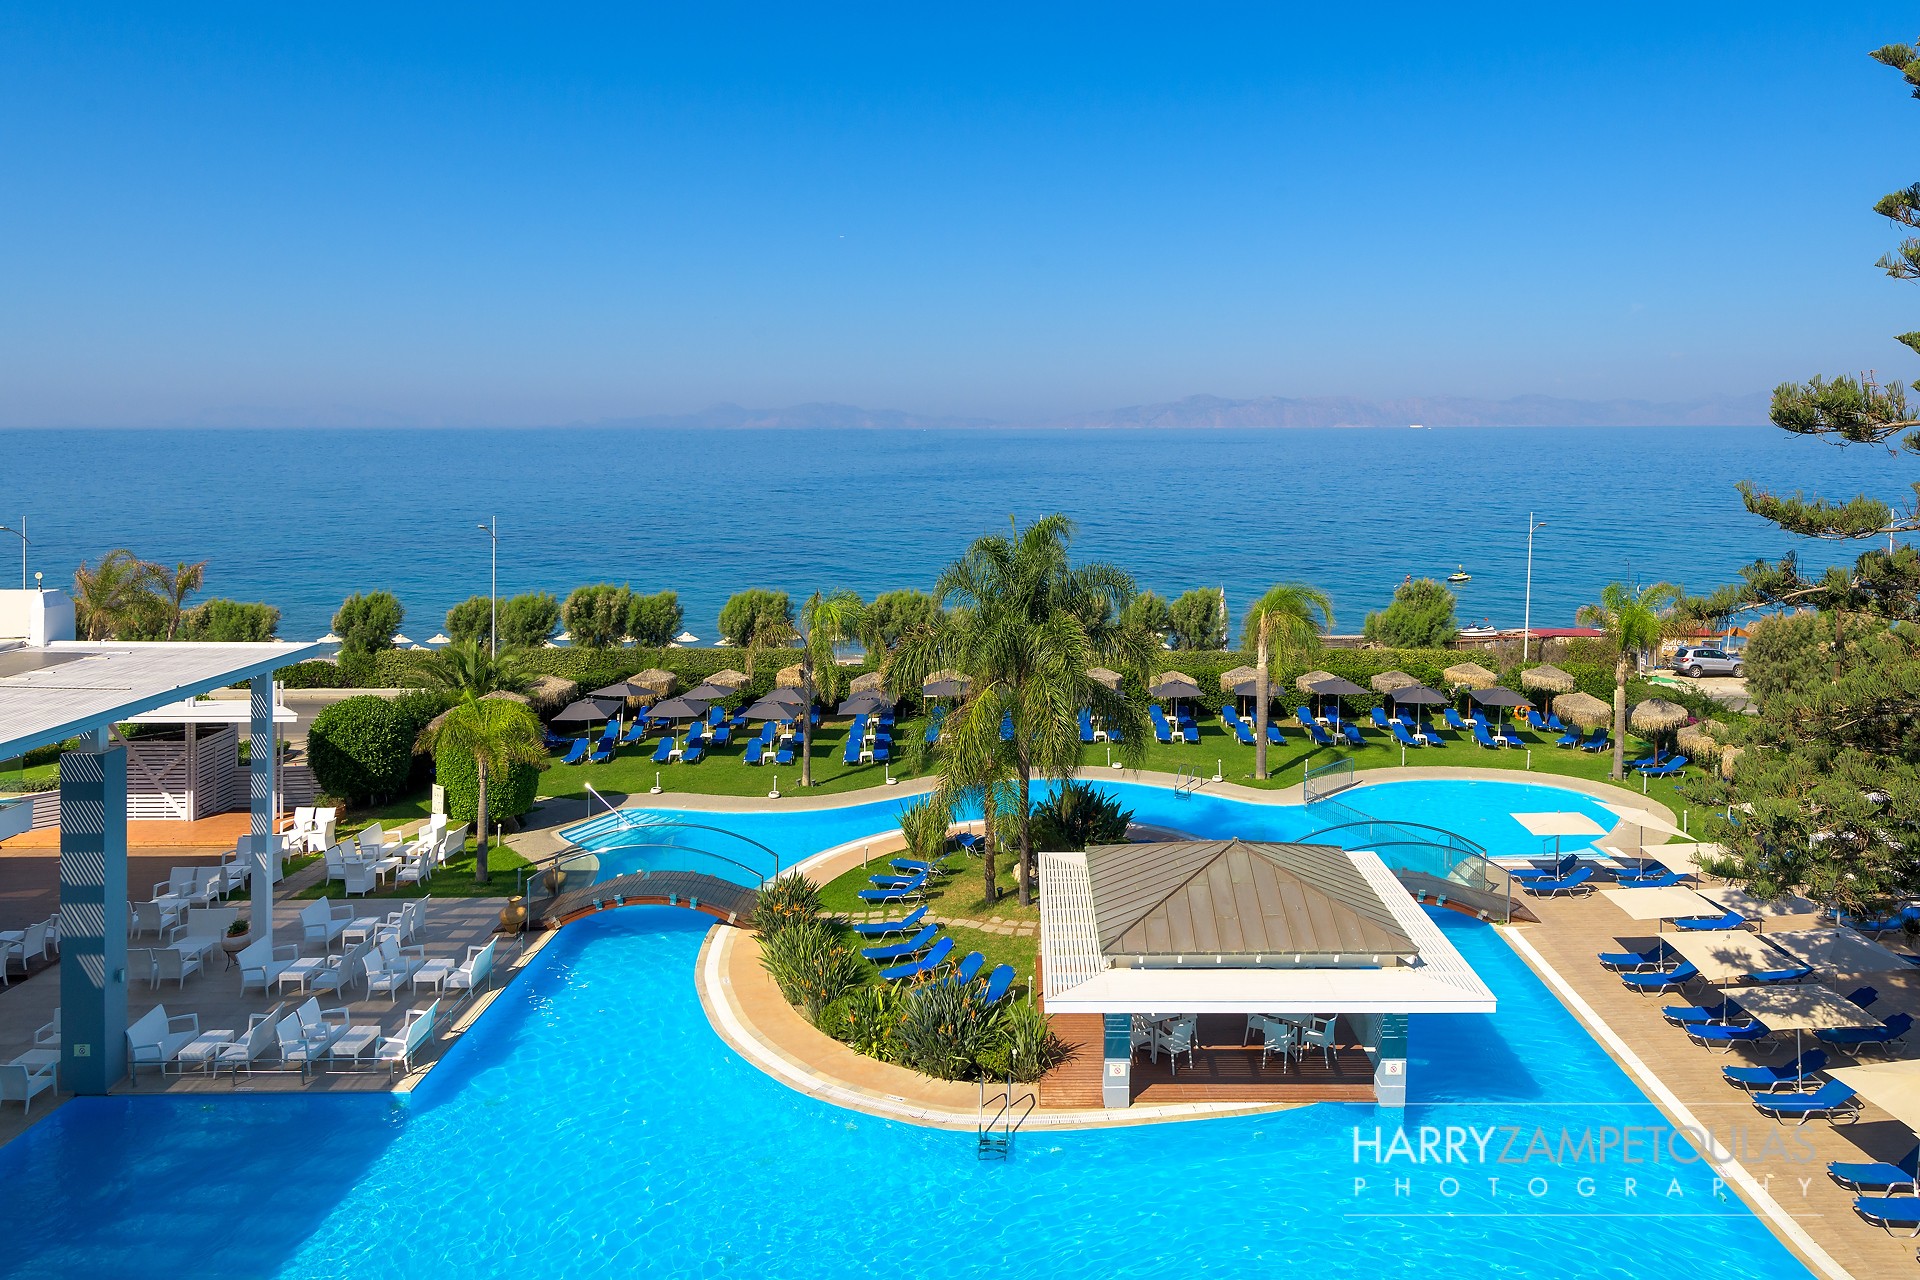 Oceanis-Hotel-Rhodes-Harry-Zampetoulas-Photography-18 Oceanis Hotel Rhodes - Hotel Photography 